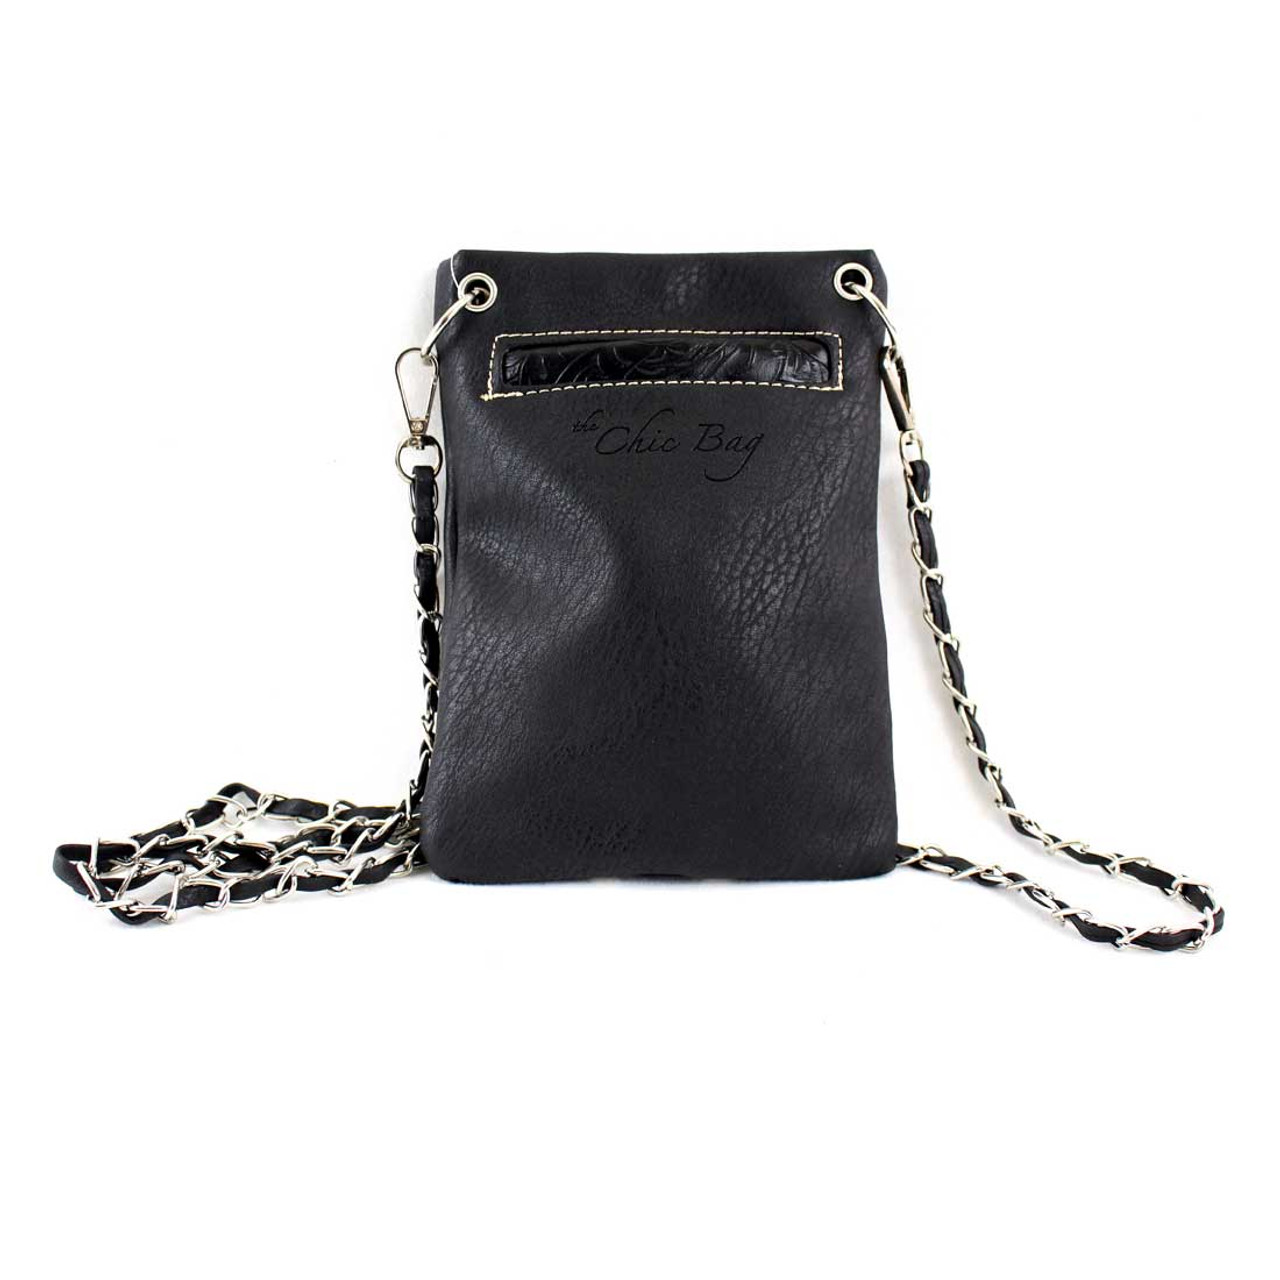 Mini Vsling Handbag With Rhinestones for Woman in Amethyst